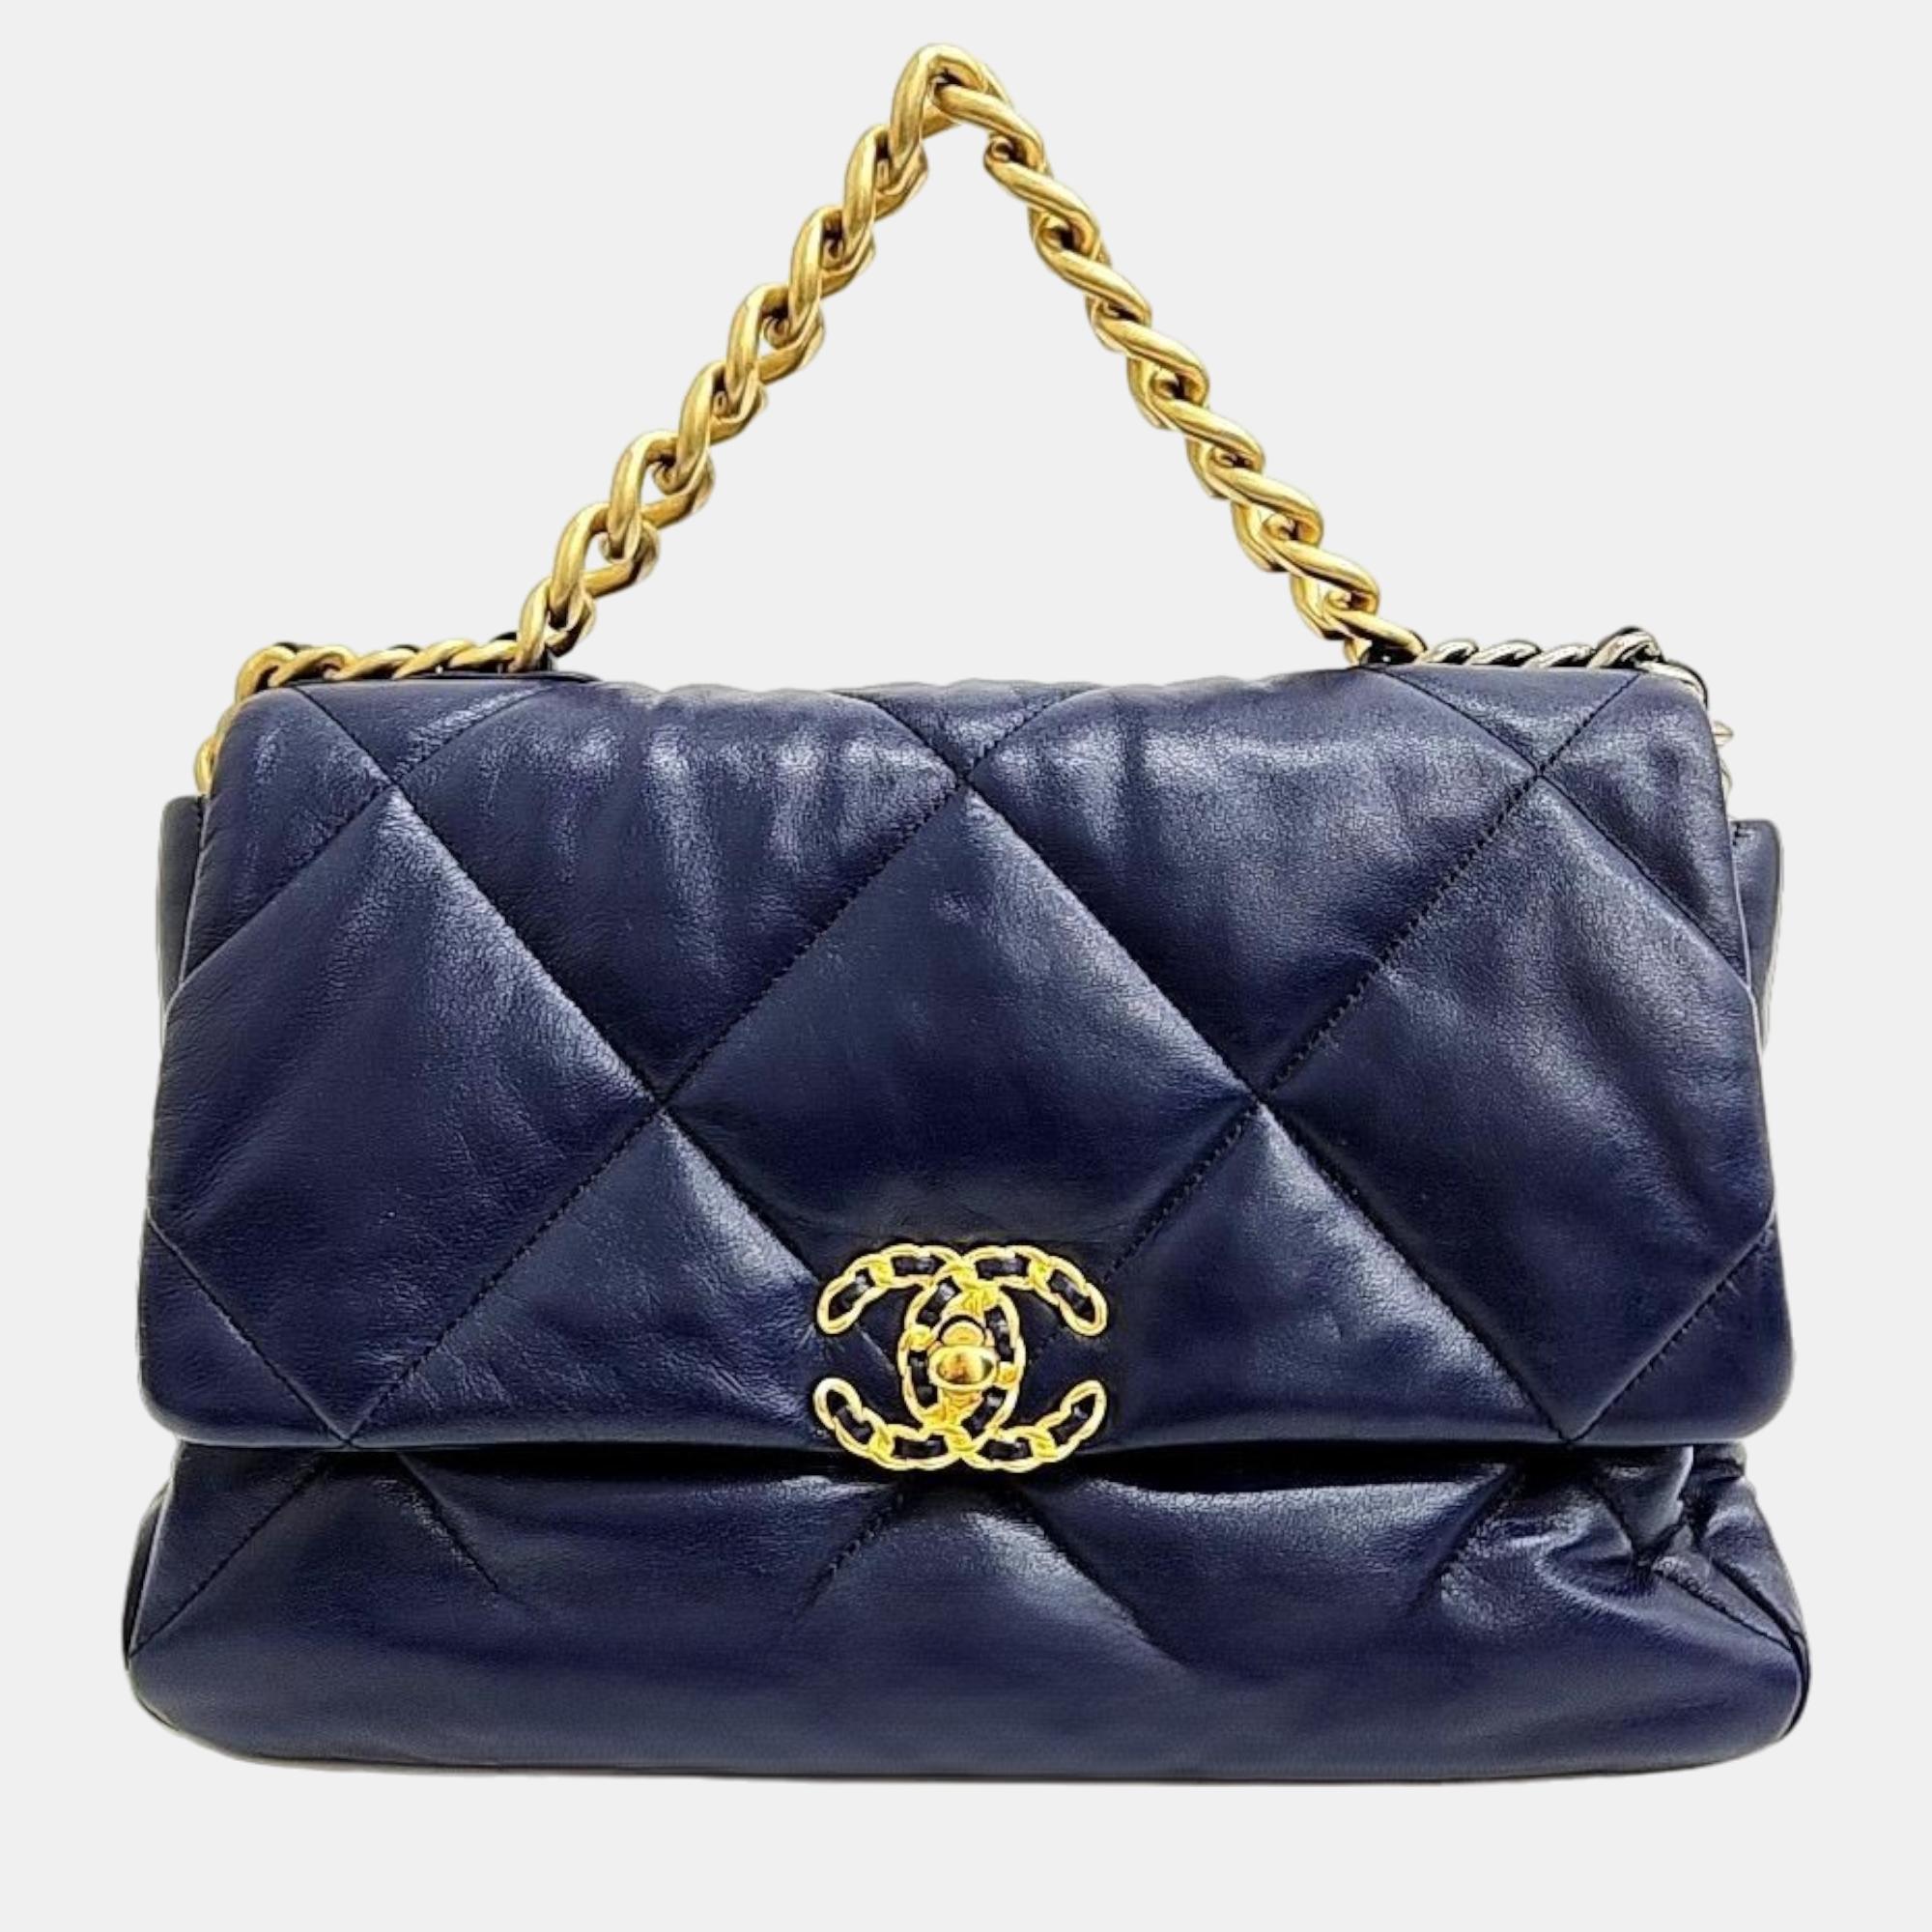 Chanel 19 Flap Bag Large